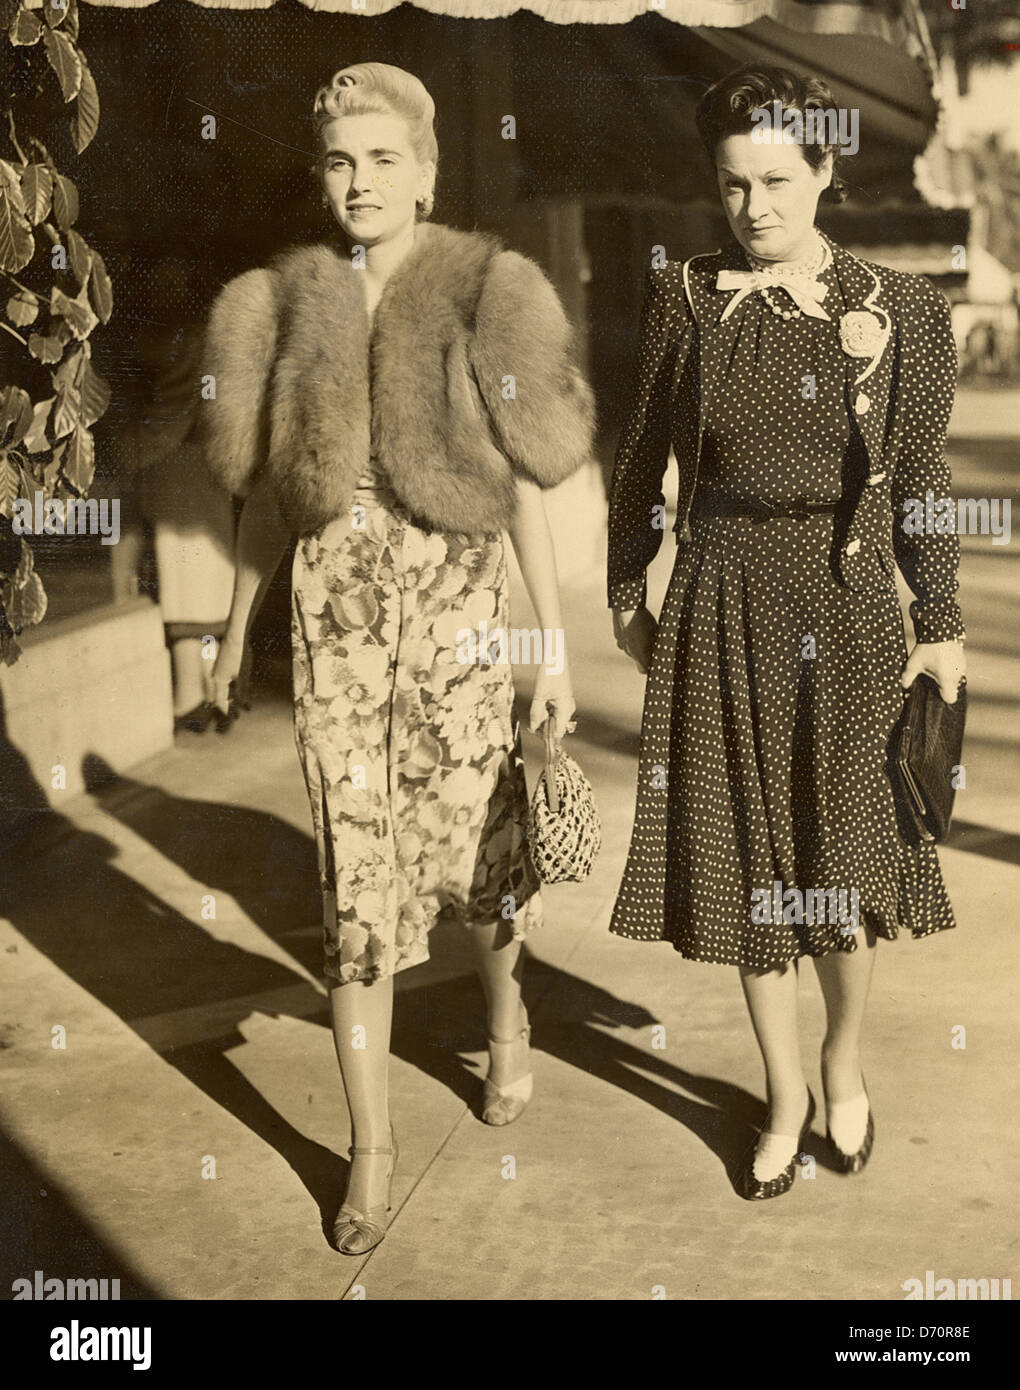 Countess Barbara Haugwitz Reventlow (Barbara Hutton) and friend, Palm Beach, ca 1940. Bert Morgan Photo Stock Photo